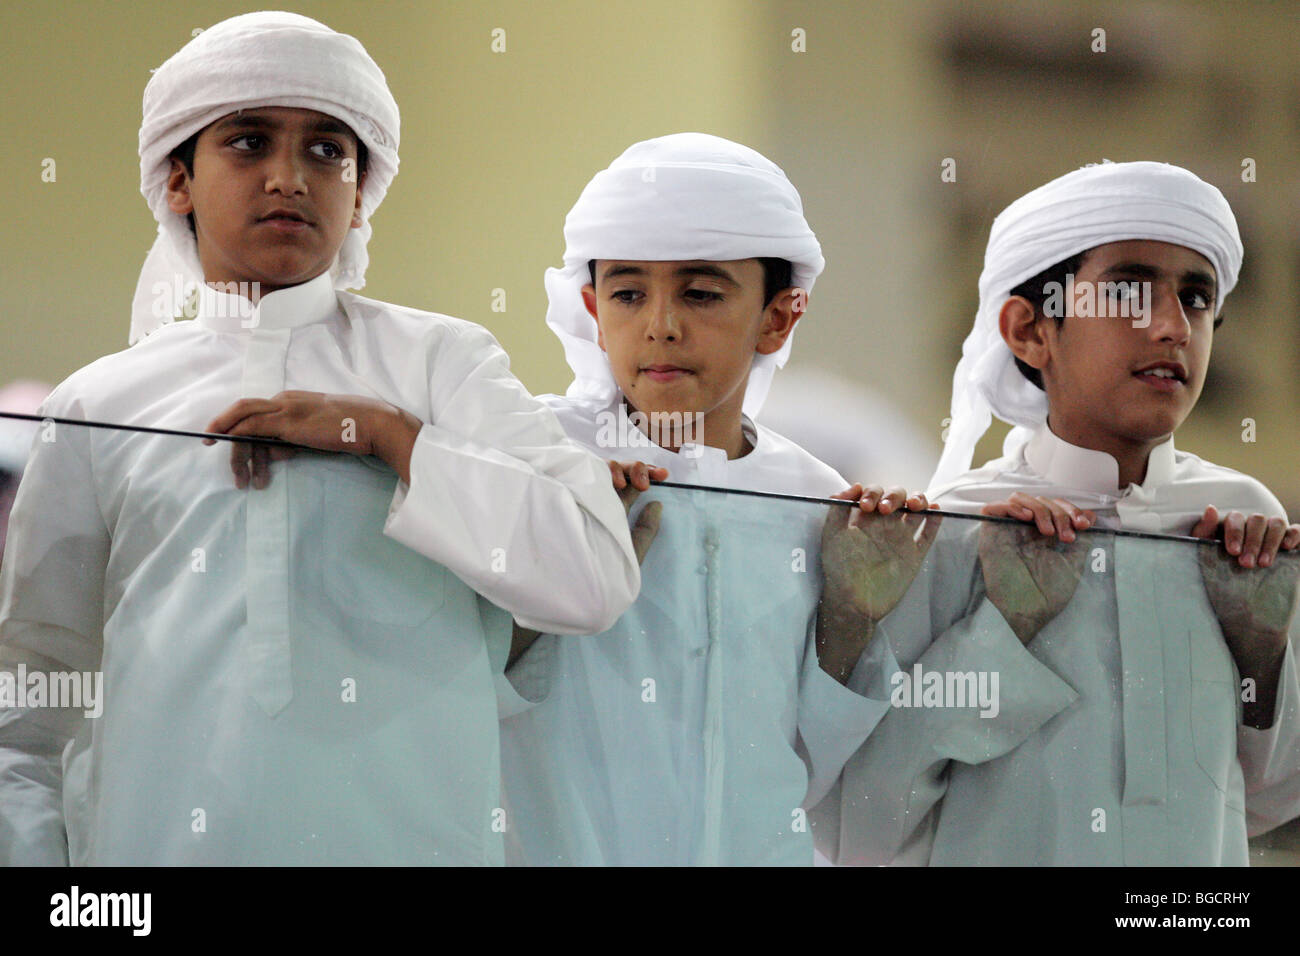 Children in traditional clothing, Dubai, United Arab Emirates Stock Photo